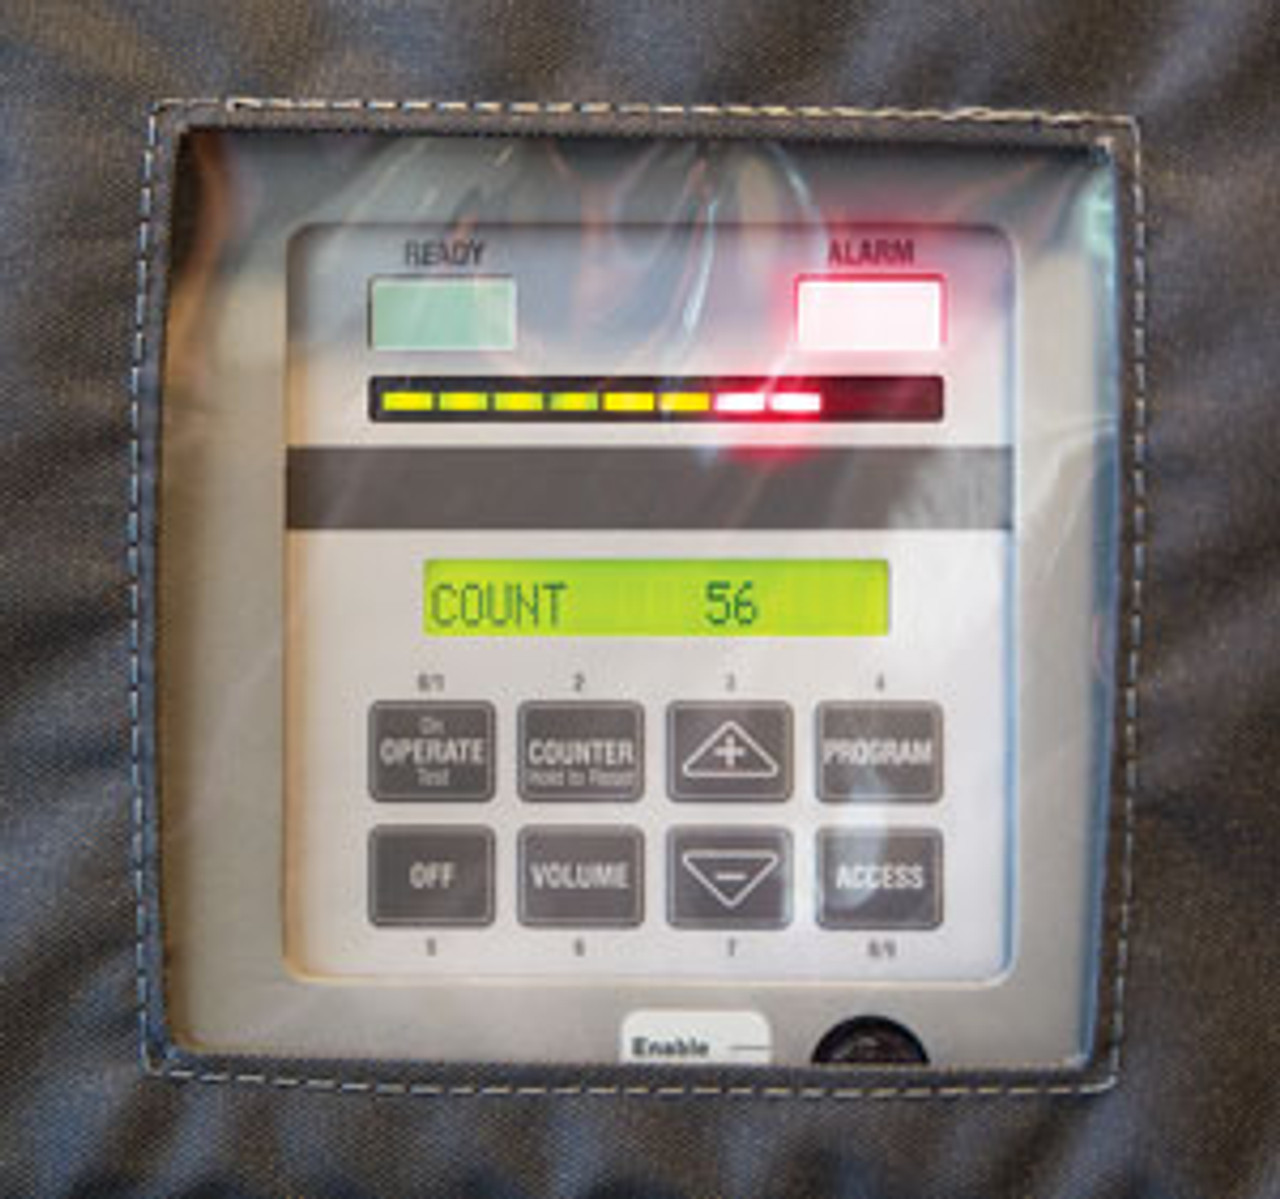 Garrett PD 6500i Mobile Walk-Through Metal Detector - Soft Environmental Cover